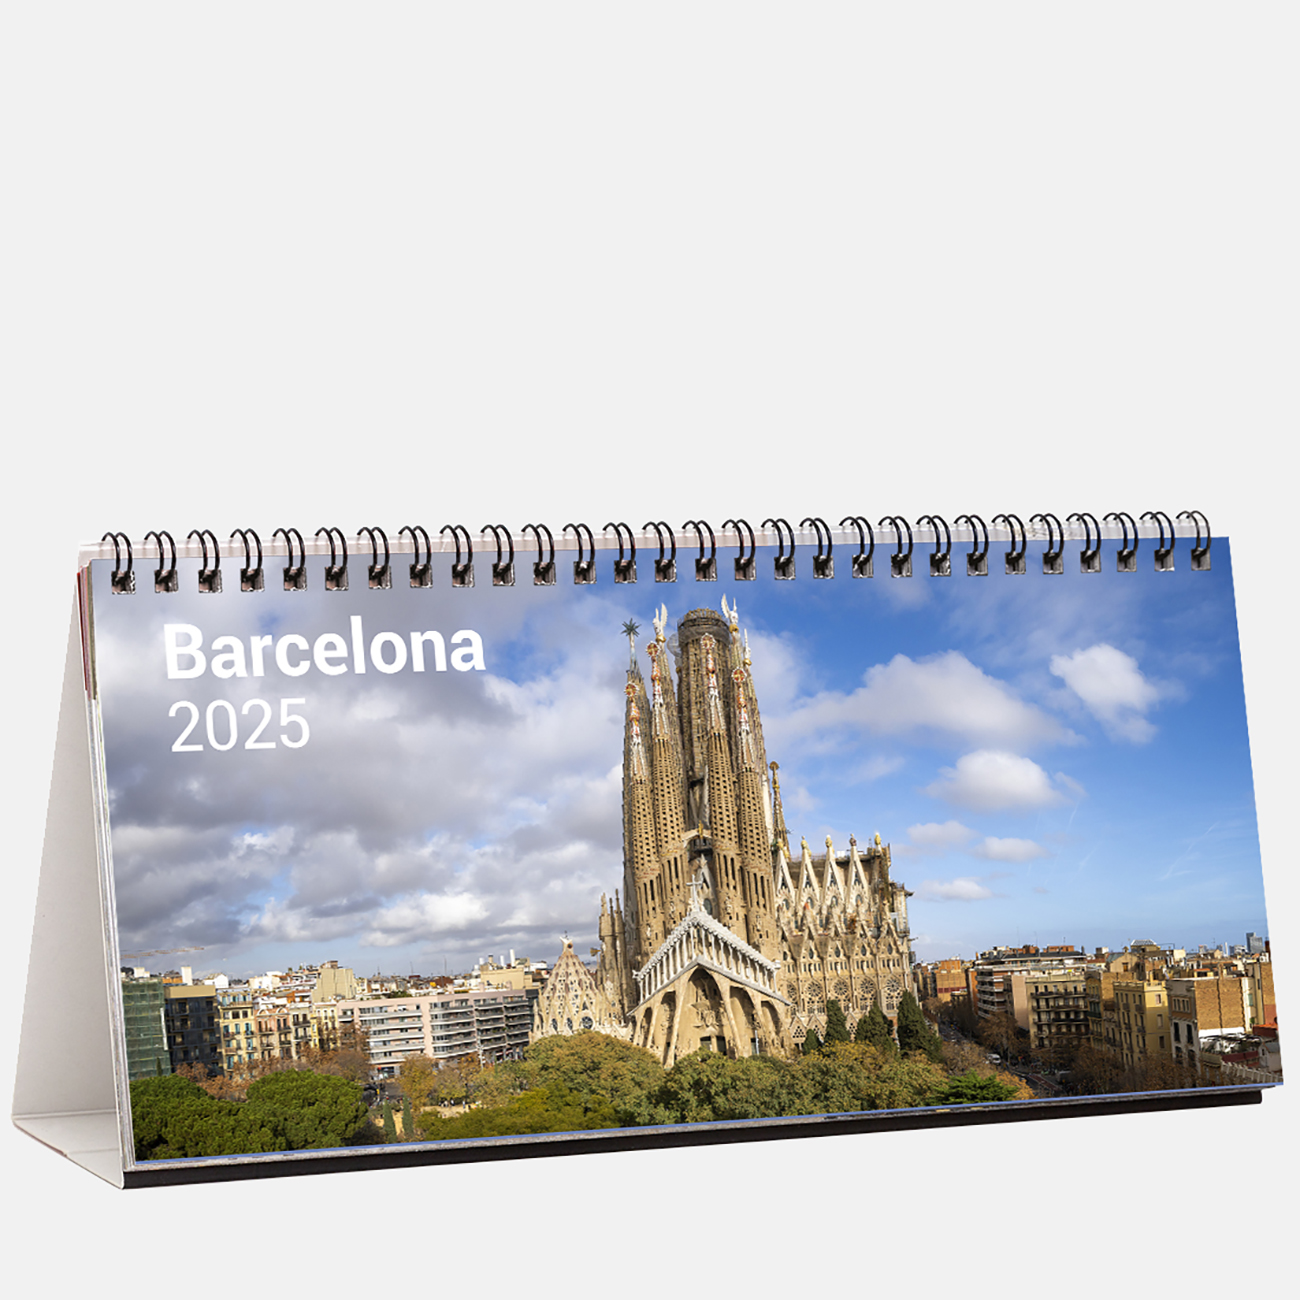 Calendari 2025 Barcelona s25b calendario sobremesa panoramico 2025 barcelona